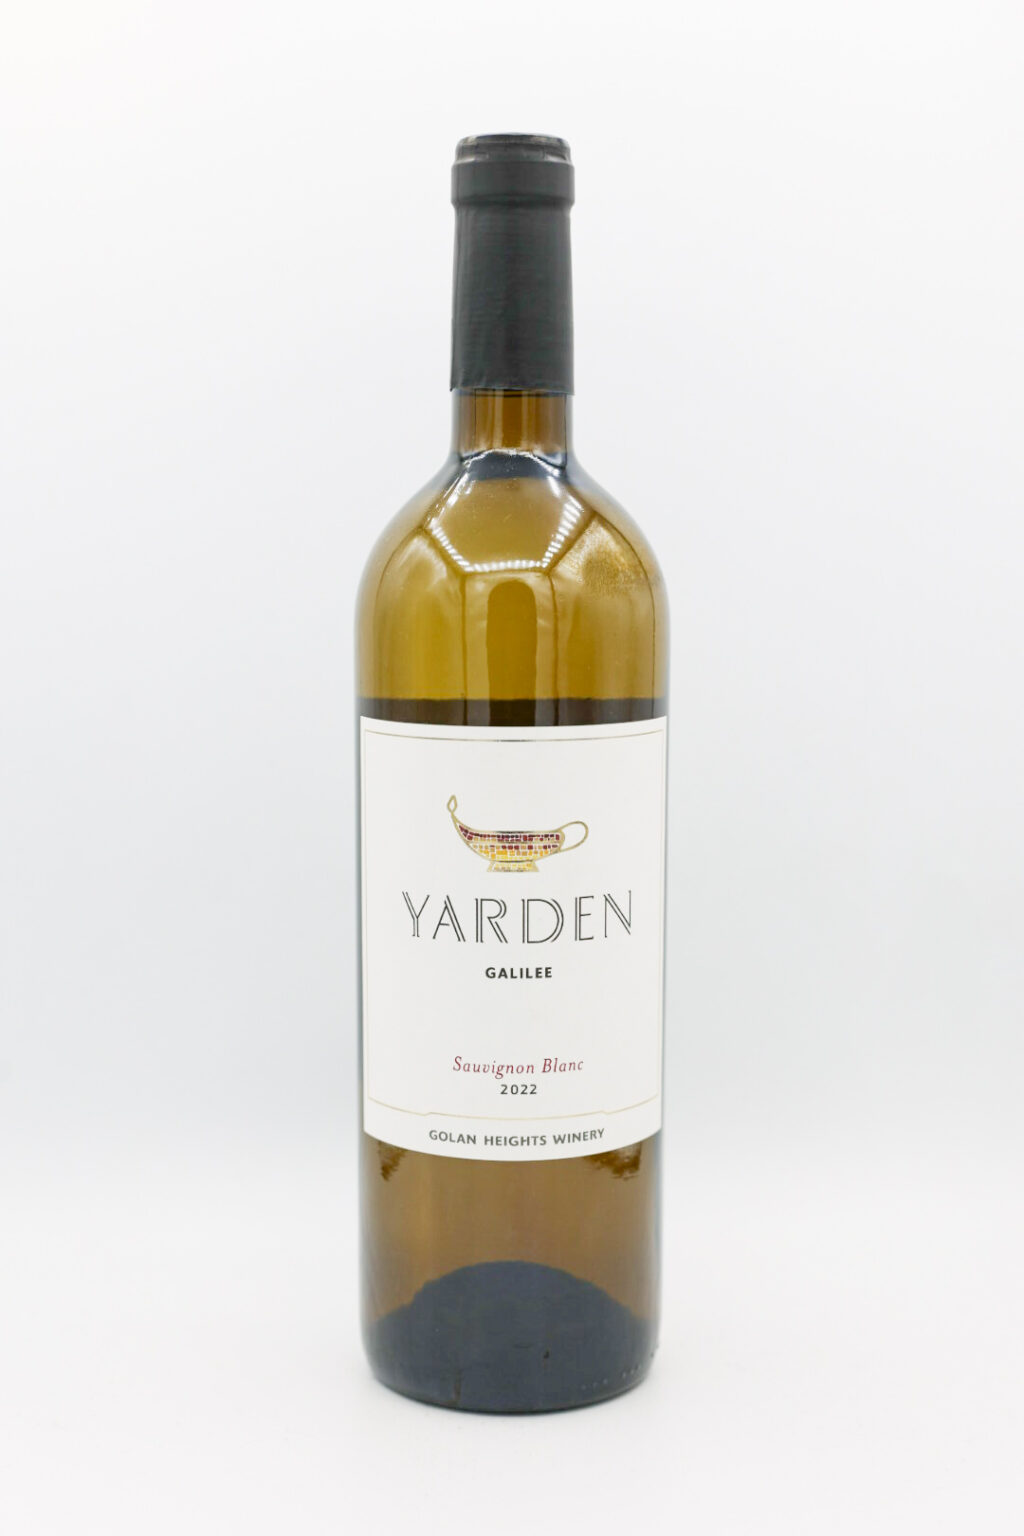 Golan Heights Winery Yarden Sauvignon Blanc 2022